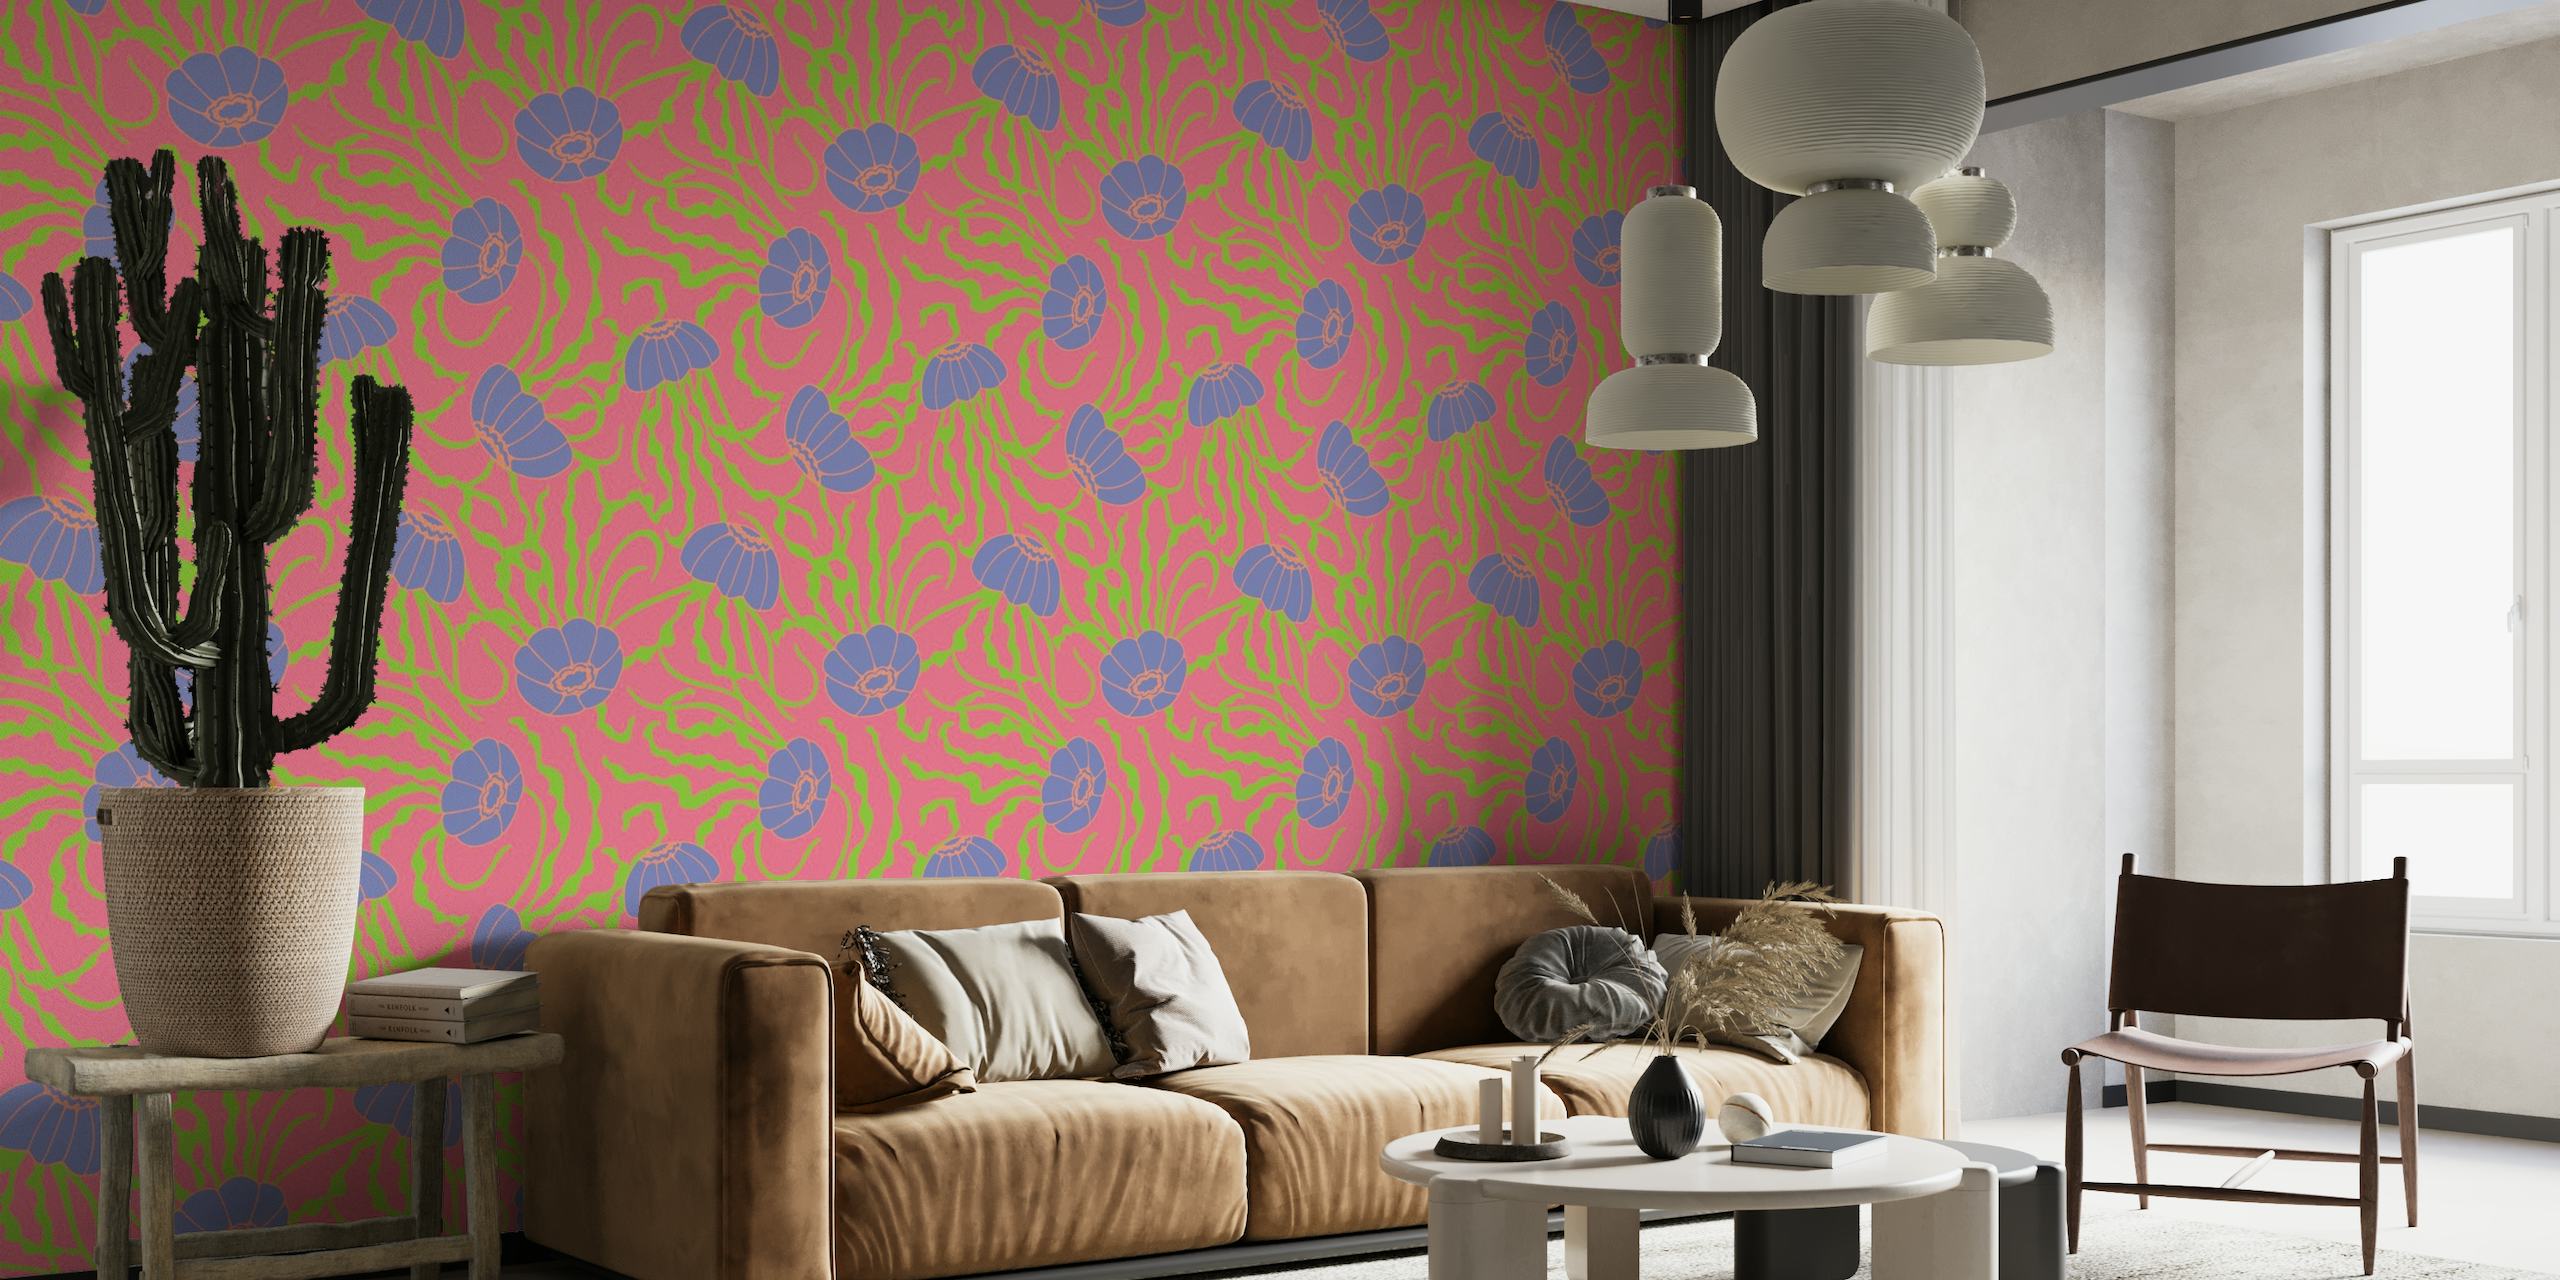 Elegante patrón de medusas de color púrpura sobre un mural de pared de fondo rosa coral.